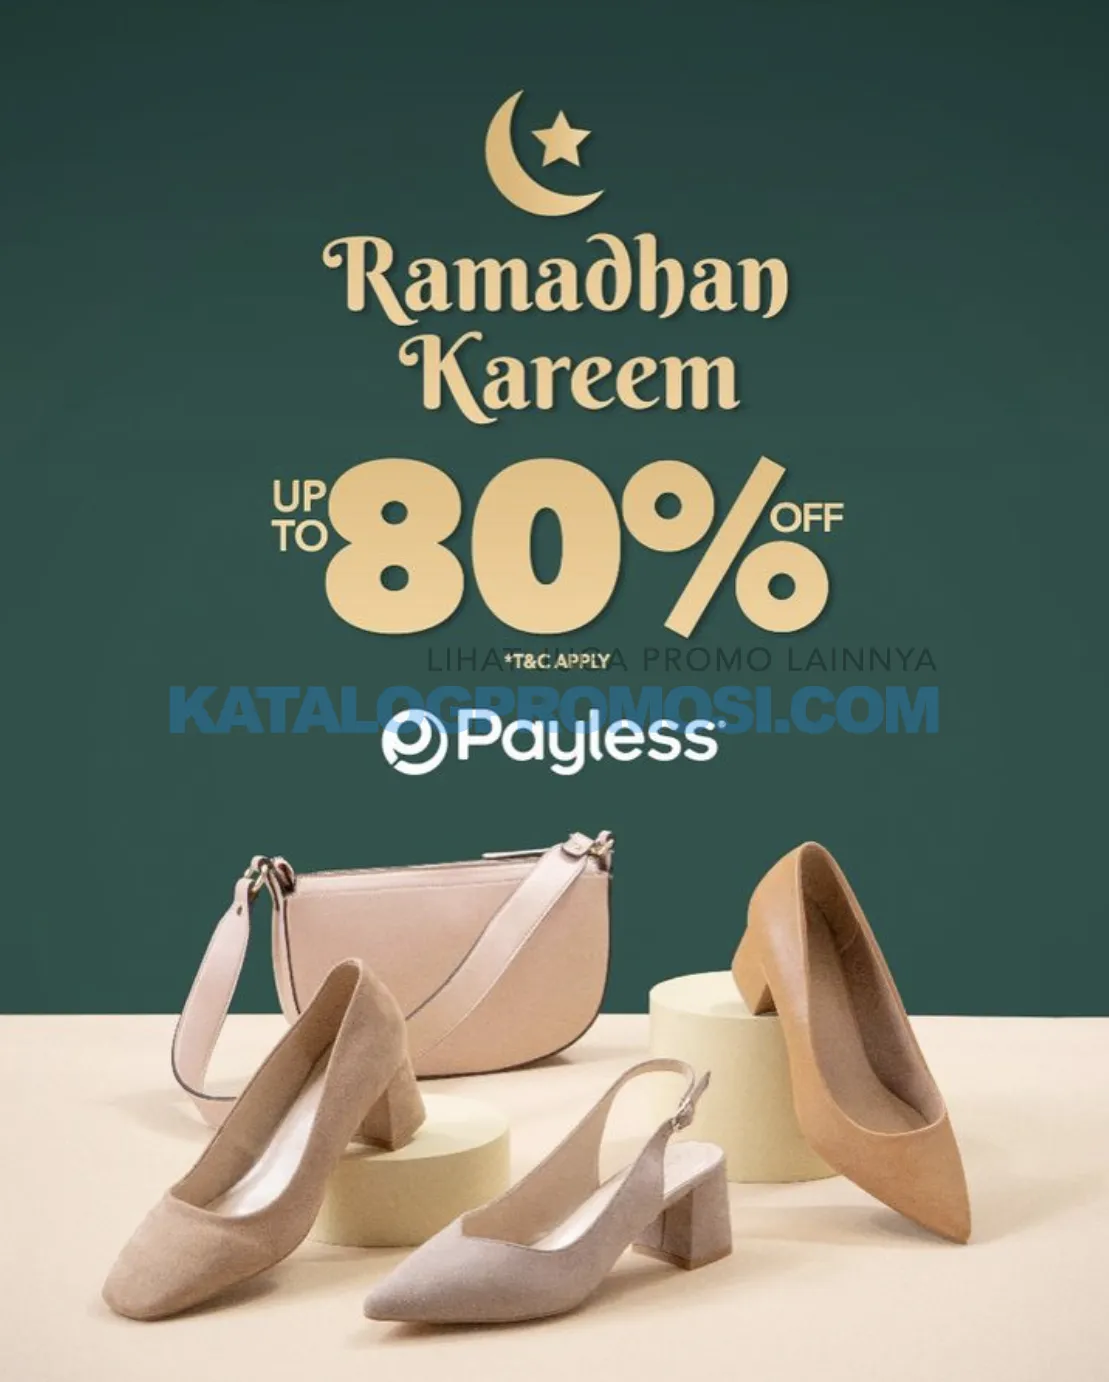 PROMO PAYLESS RAMADHAN KAREEM SALE up to 80% off